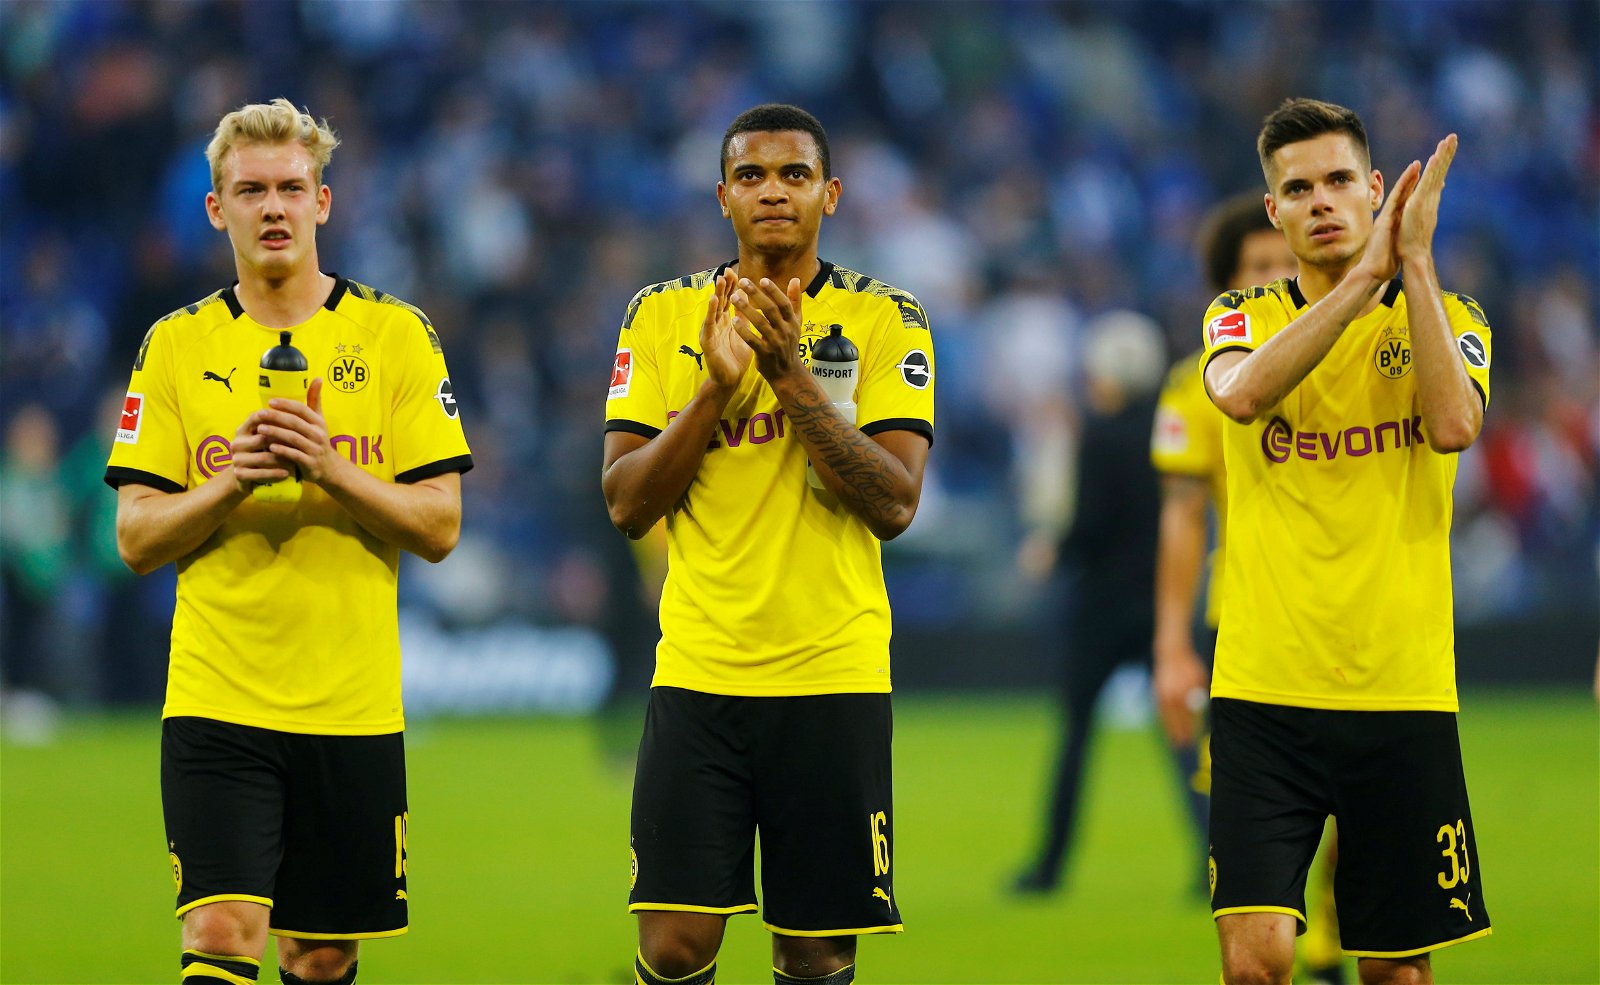 Borussia Dortmund All-Time Goalscorers